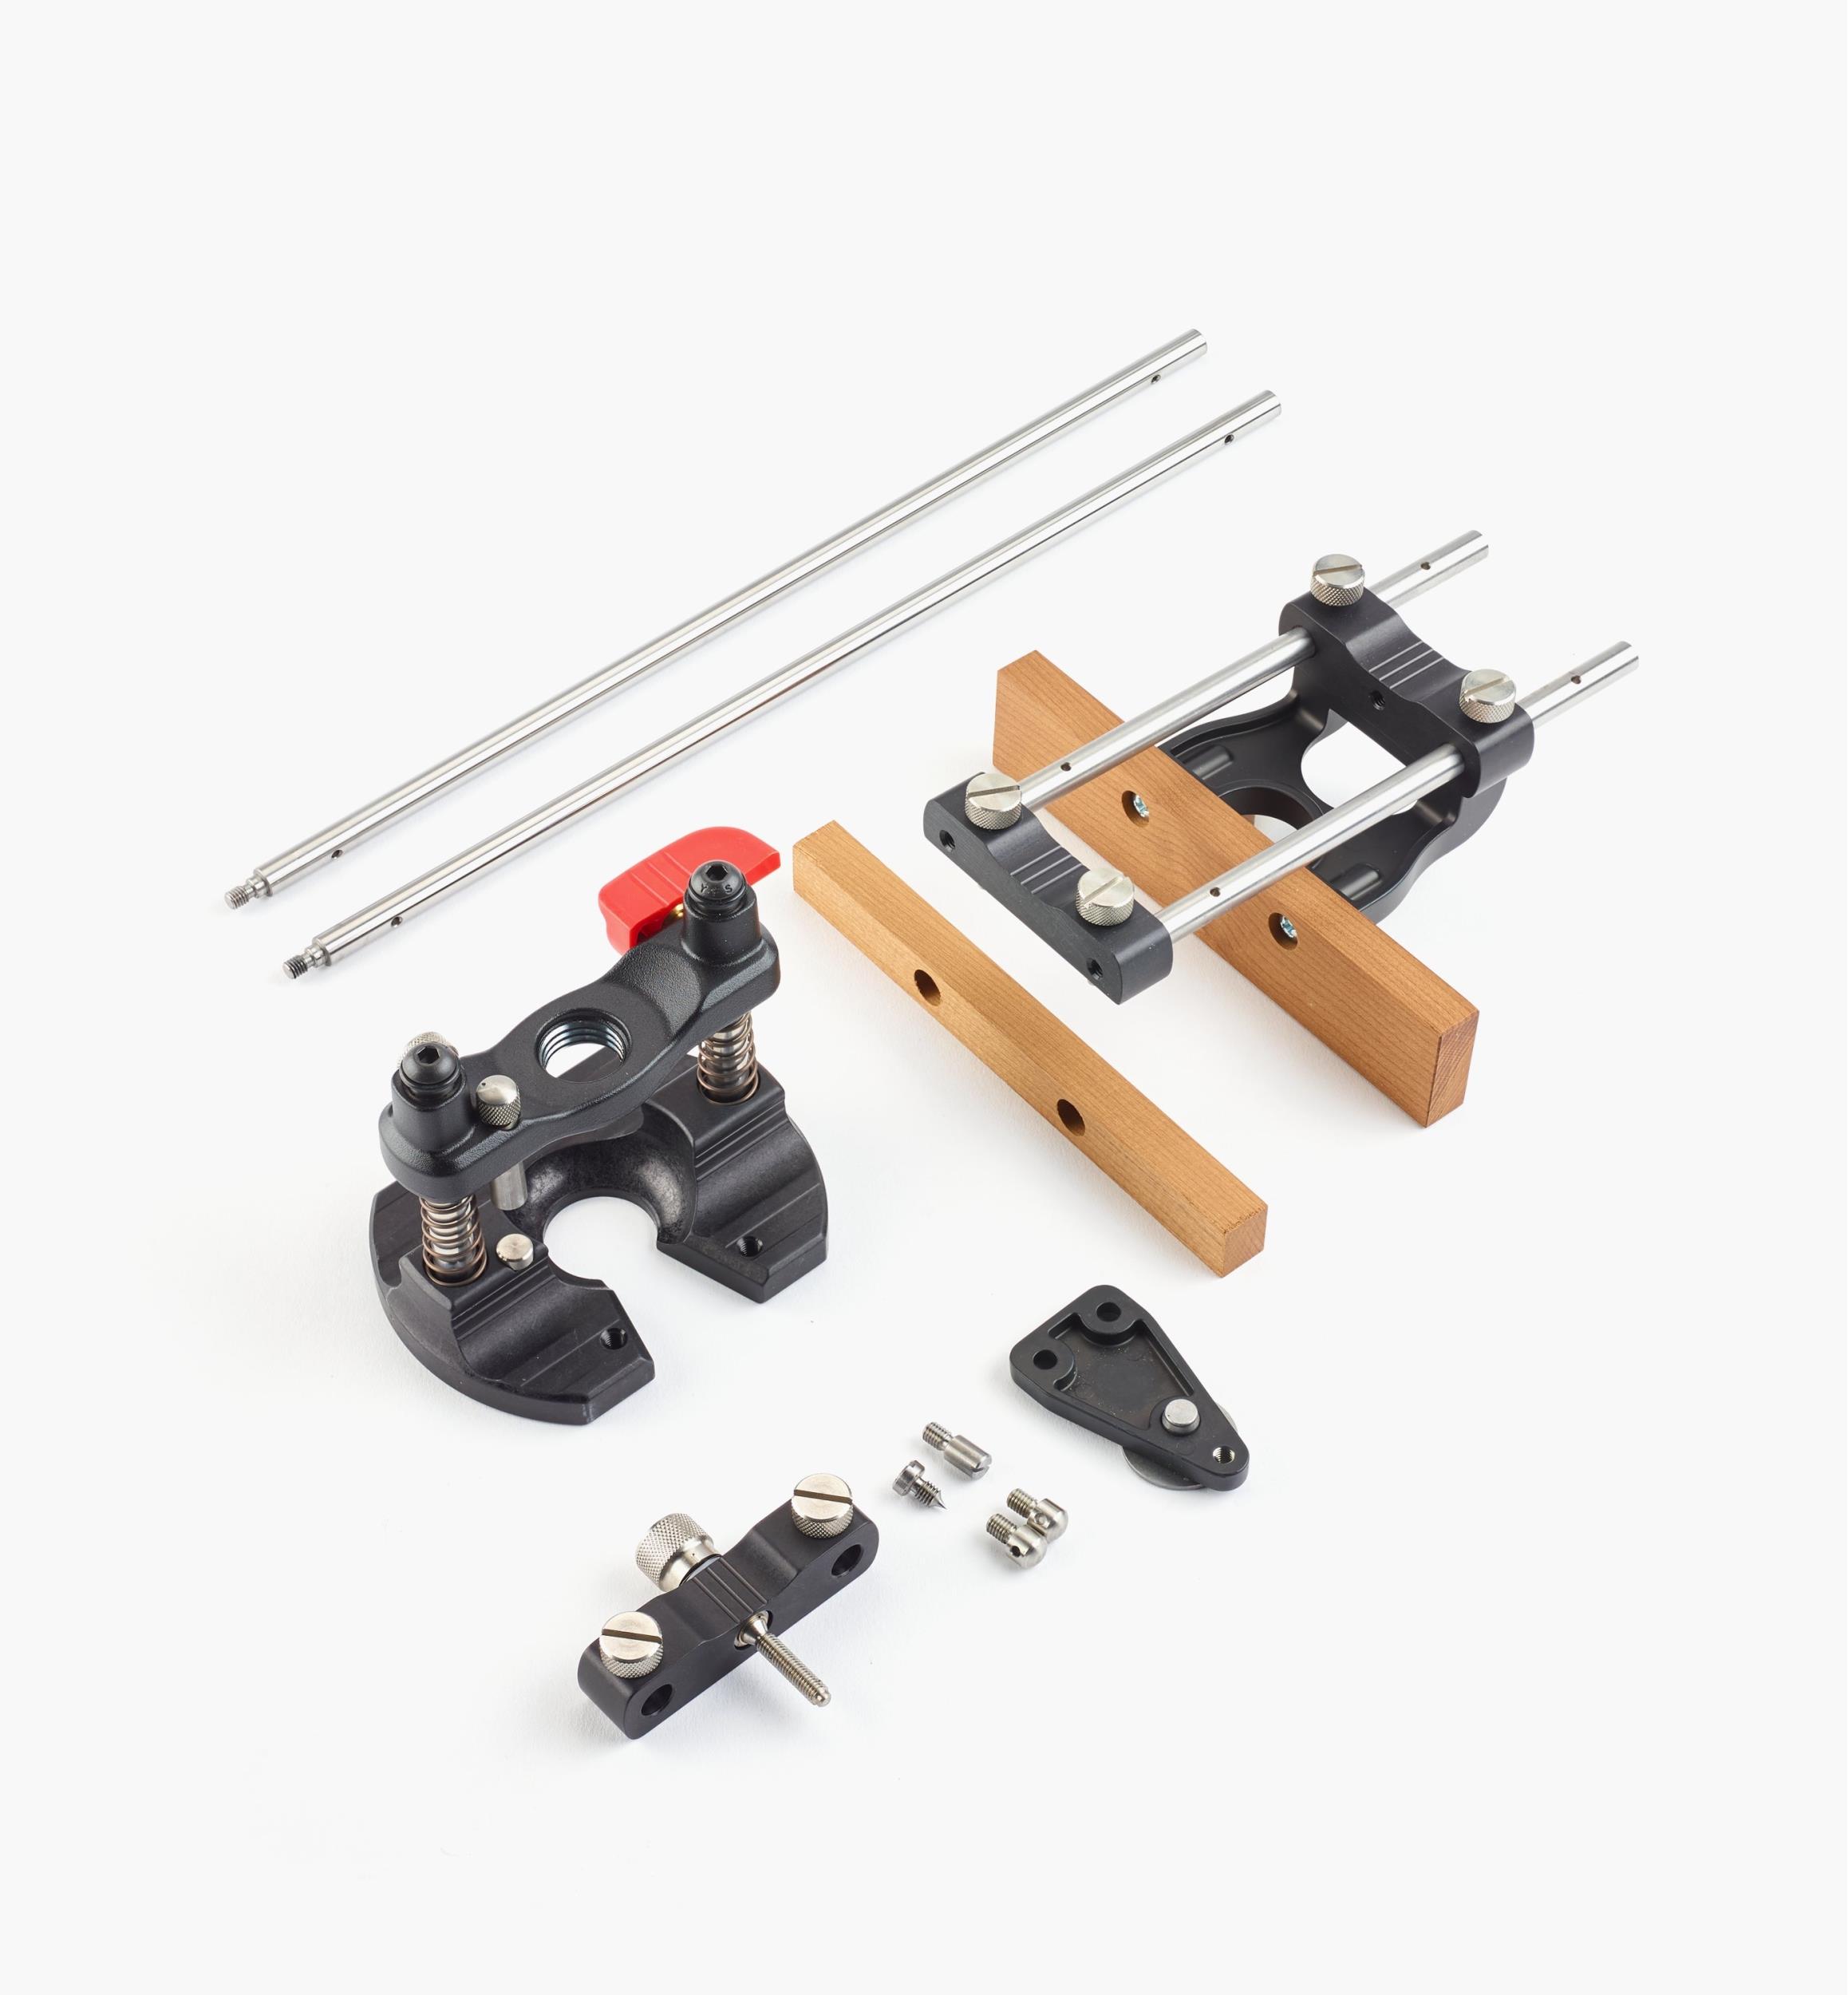 https://assets.leevalley.com/Size5/10101/05J6507-veritas-plunge-base-for-rotary-tools-complete-set-base-fence-center-kit-pair-of-12-rods-precision-adjuster-f-0014.jpg